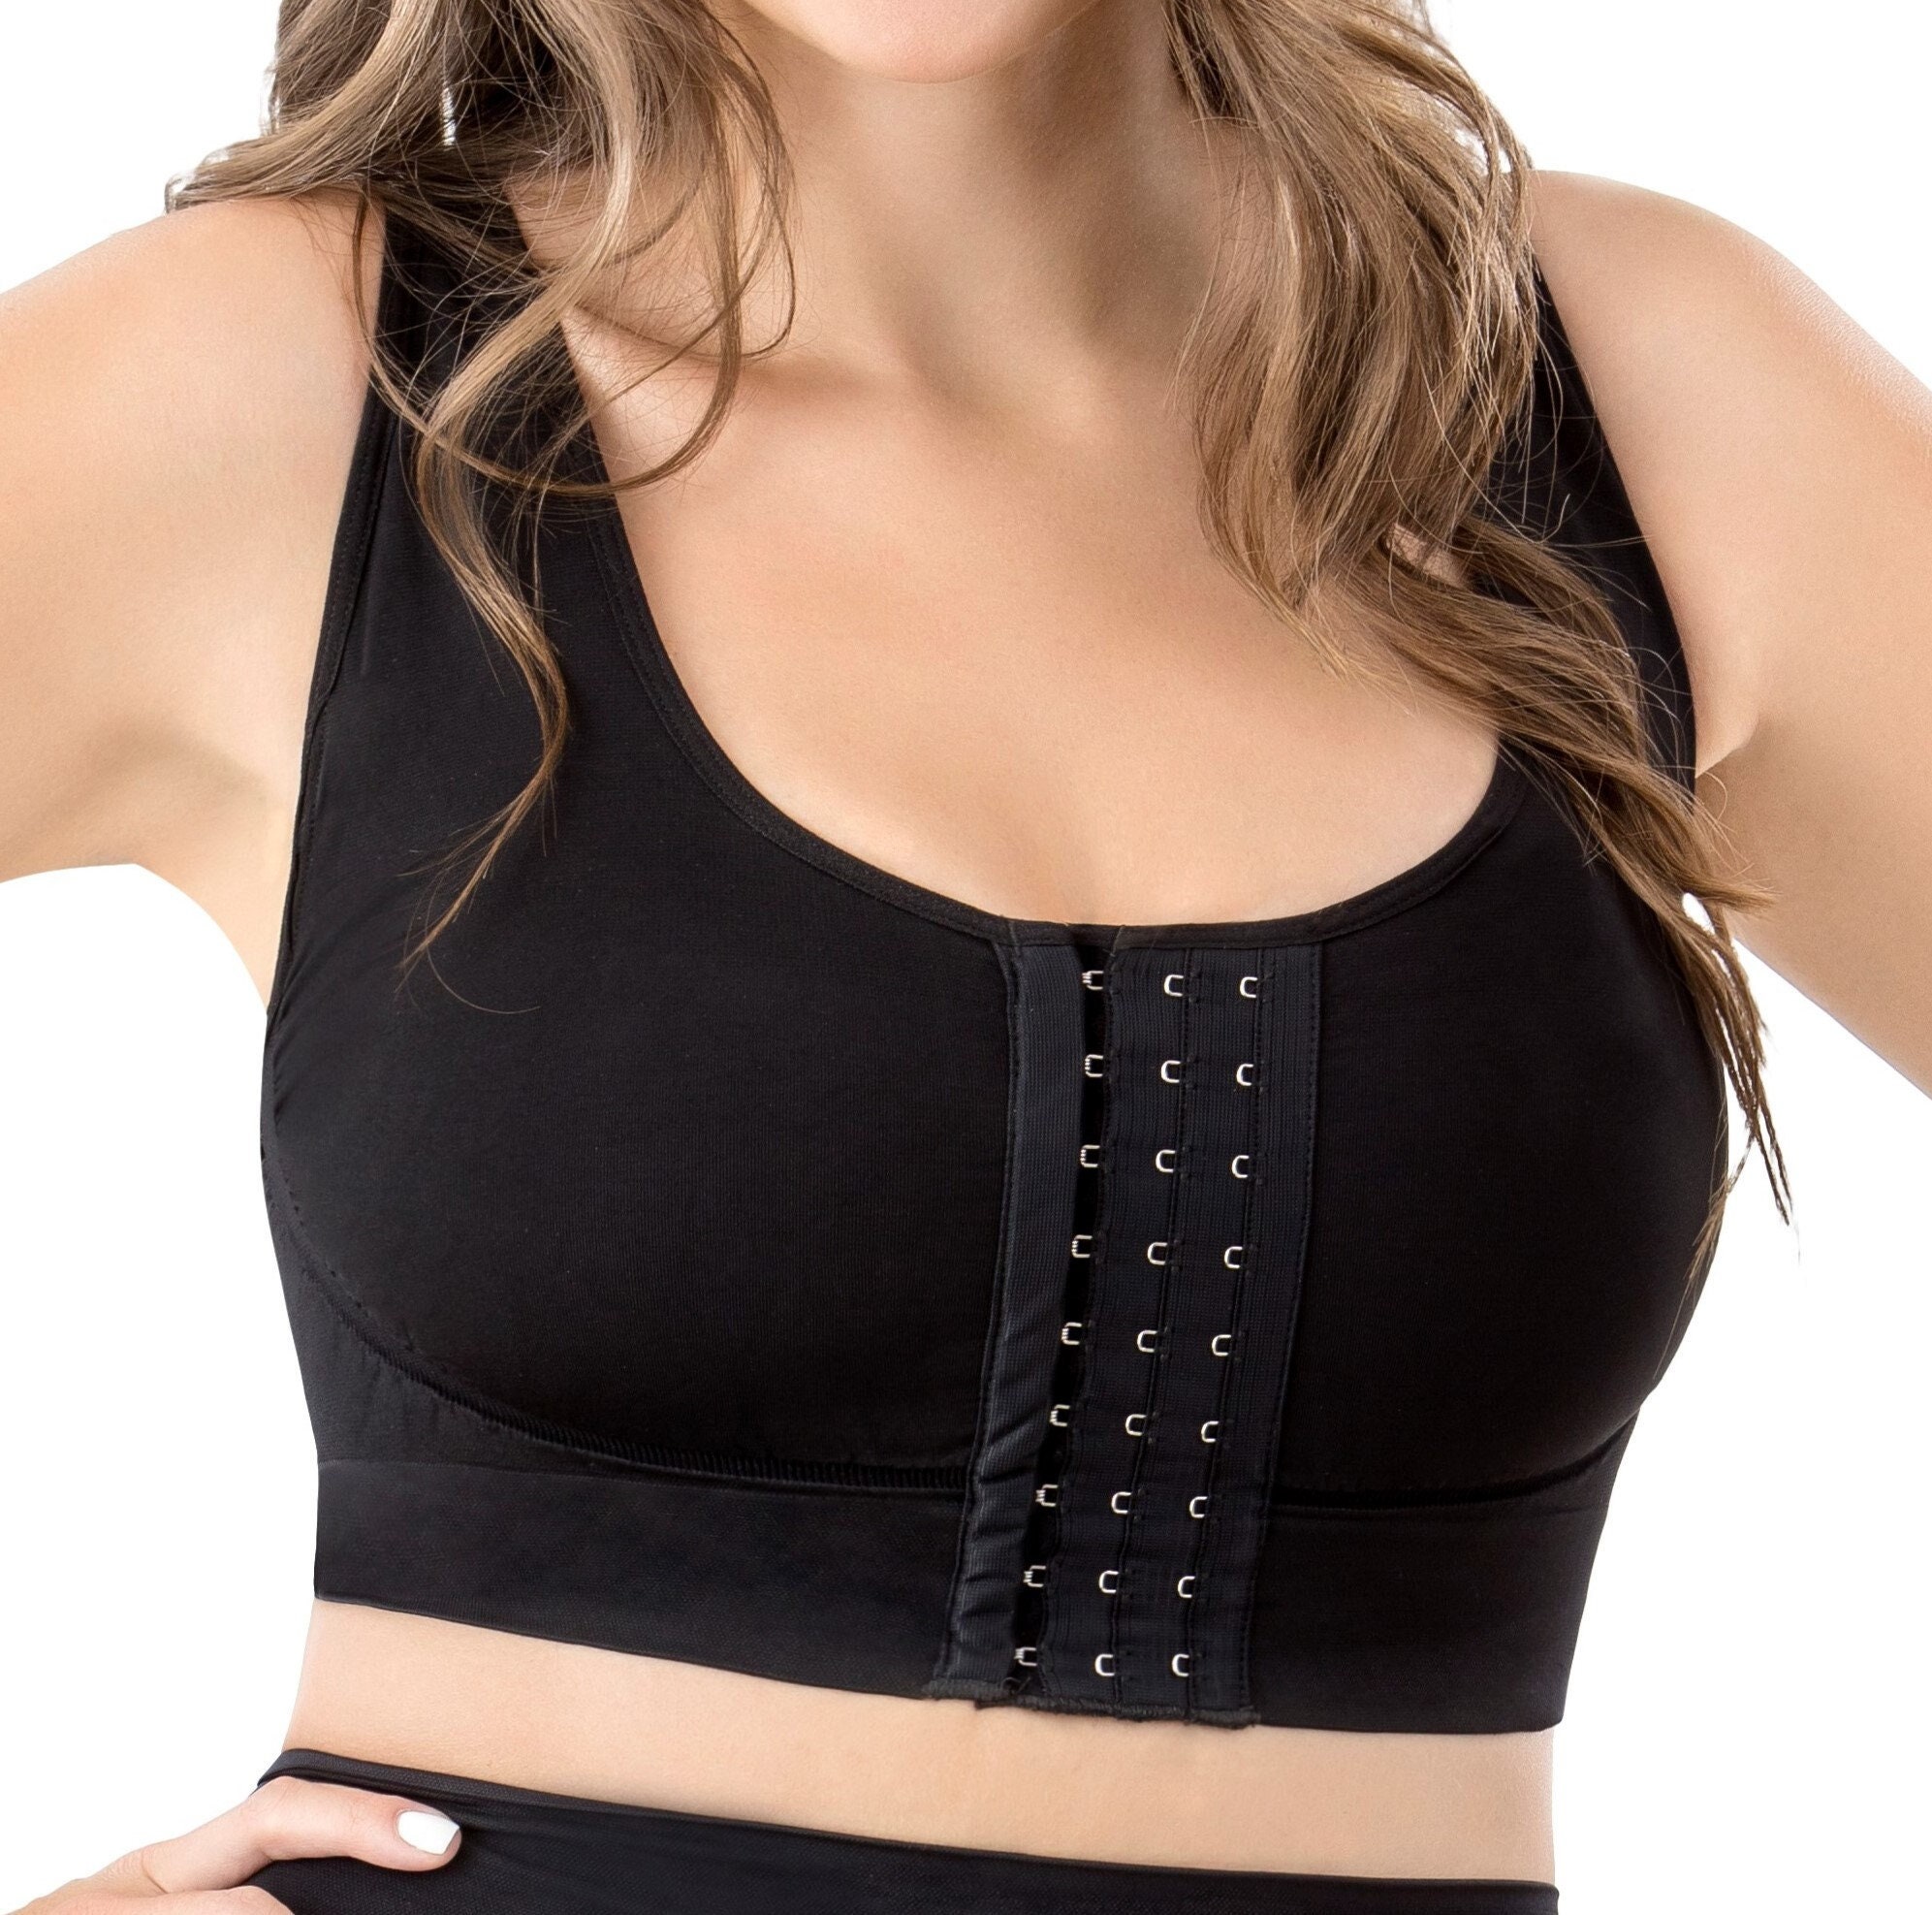 Posture Corrector for Women Breast Support Bra Top Corset Back